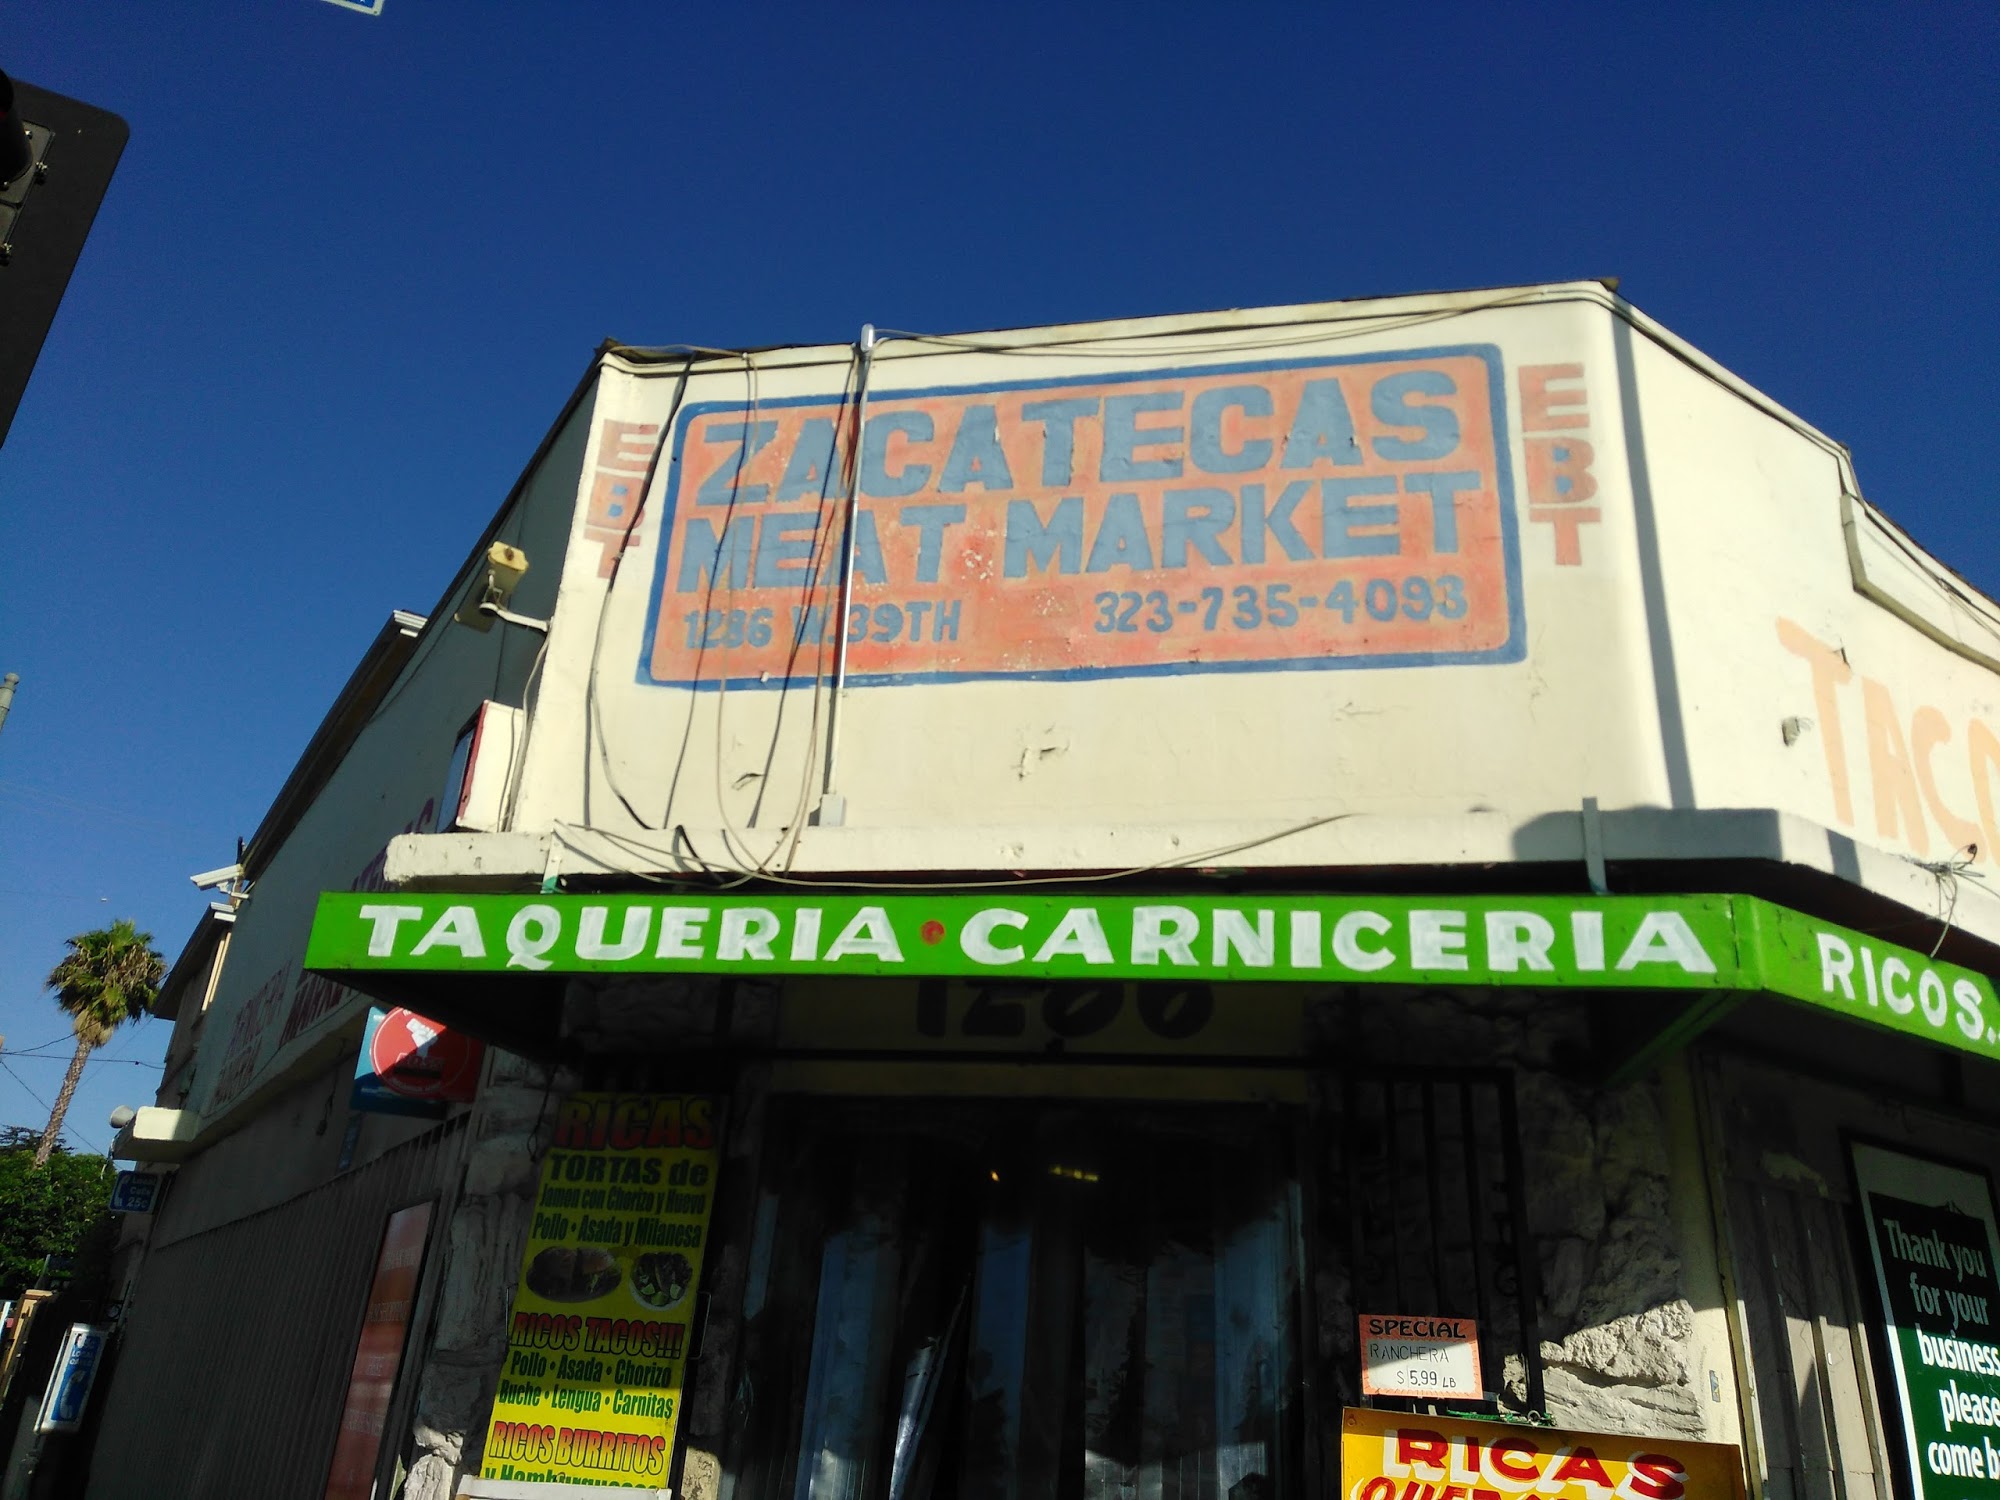 Zacatecas Meat Market